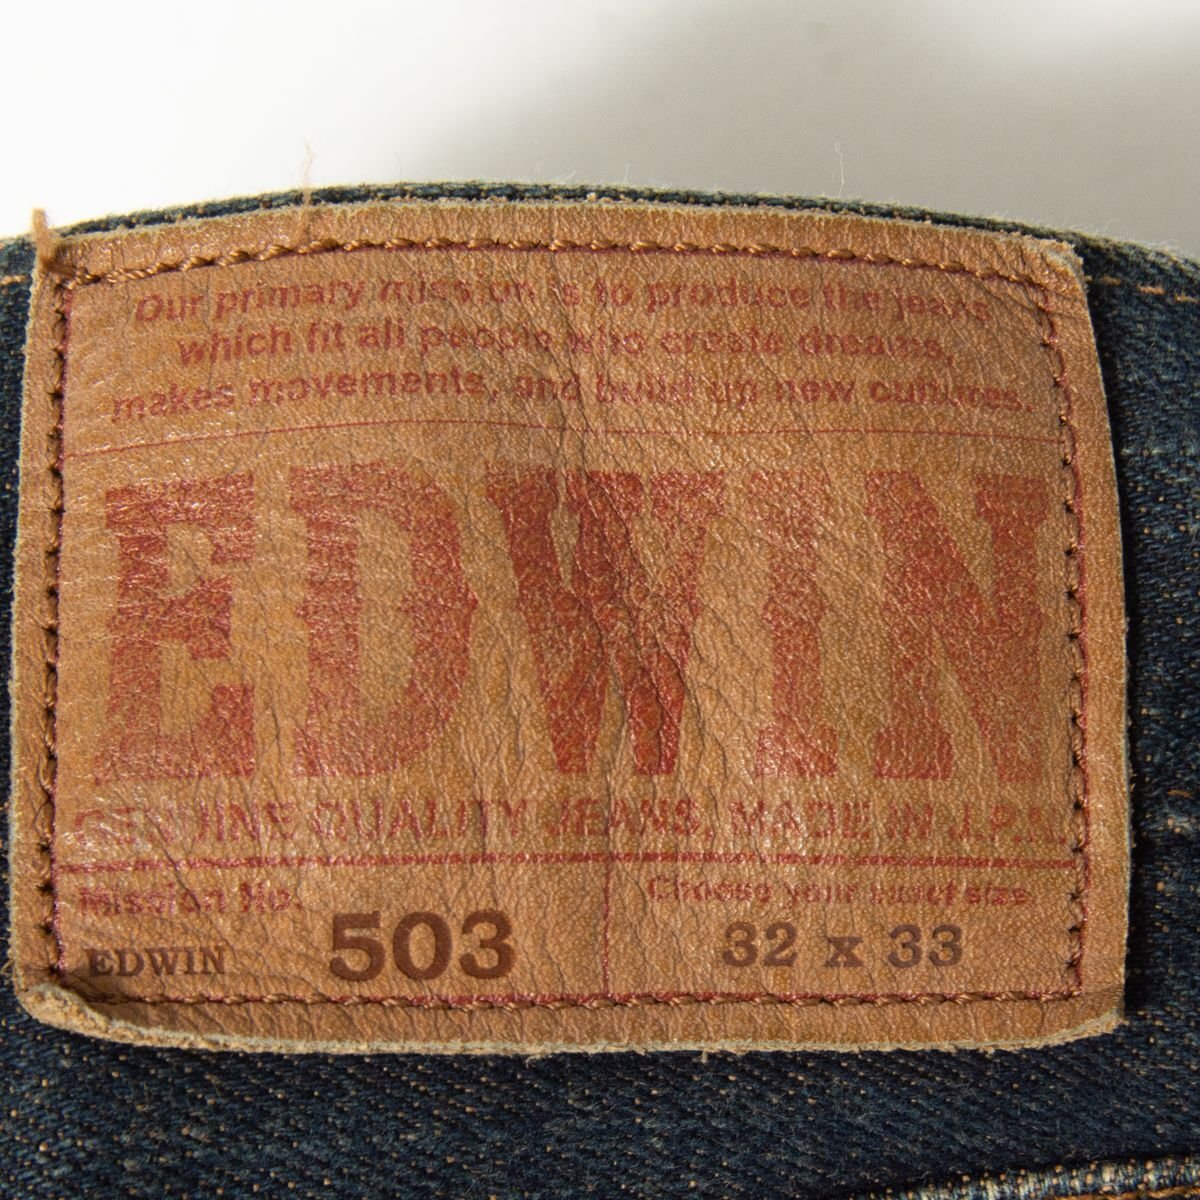 EDWIN Edwin 32×33 503 Denim брюки джинсы ji- хлеб GORE WIND STOPPERgoawa Индия стопор хлопок 100% индиго через год 